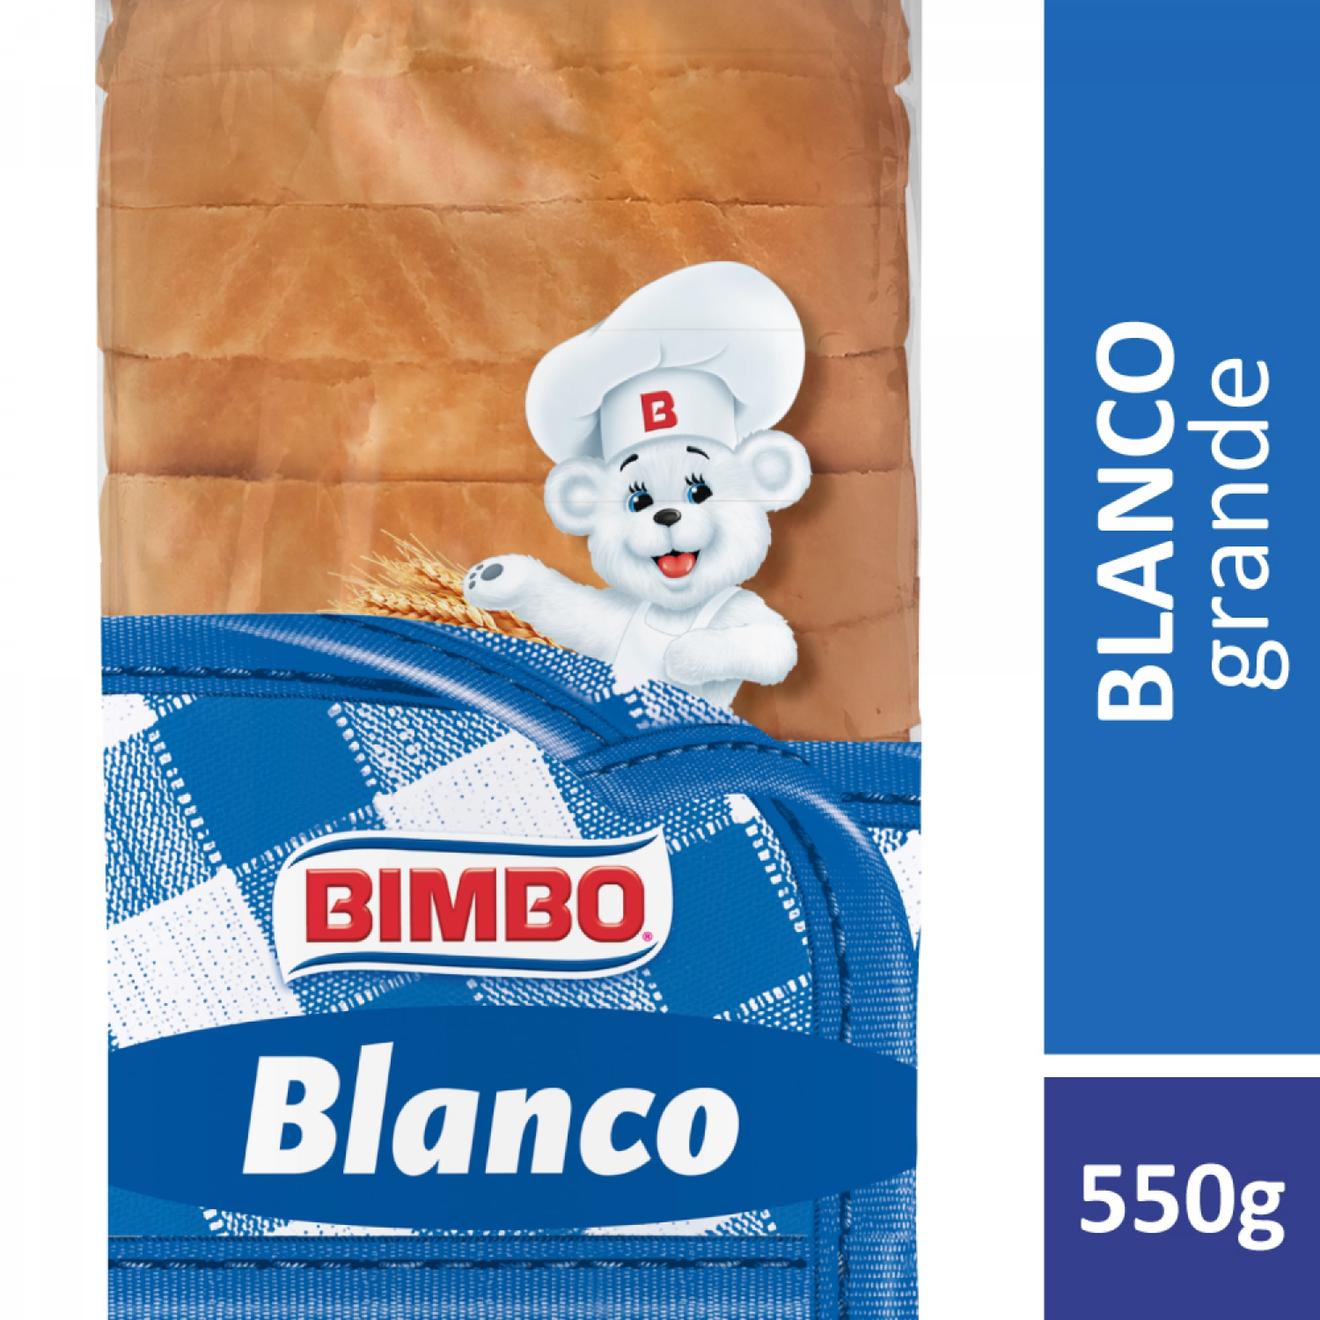 Oferta de Pan blanco Bimbo 550 g. por $4250 en Carrefour